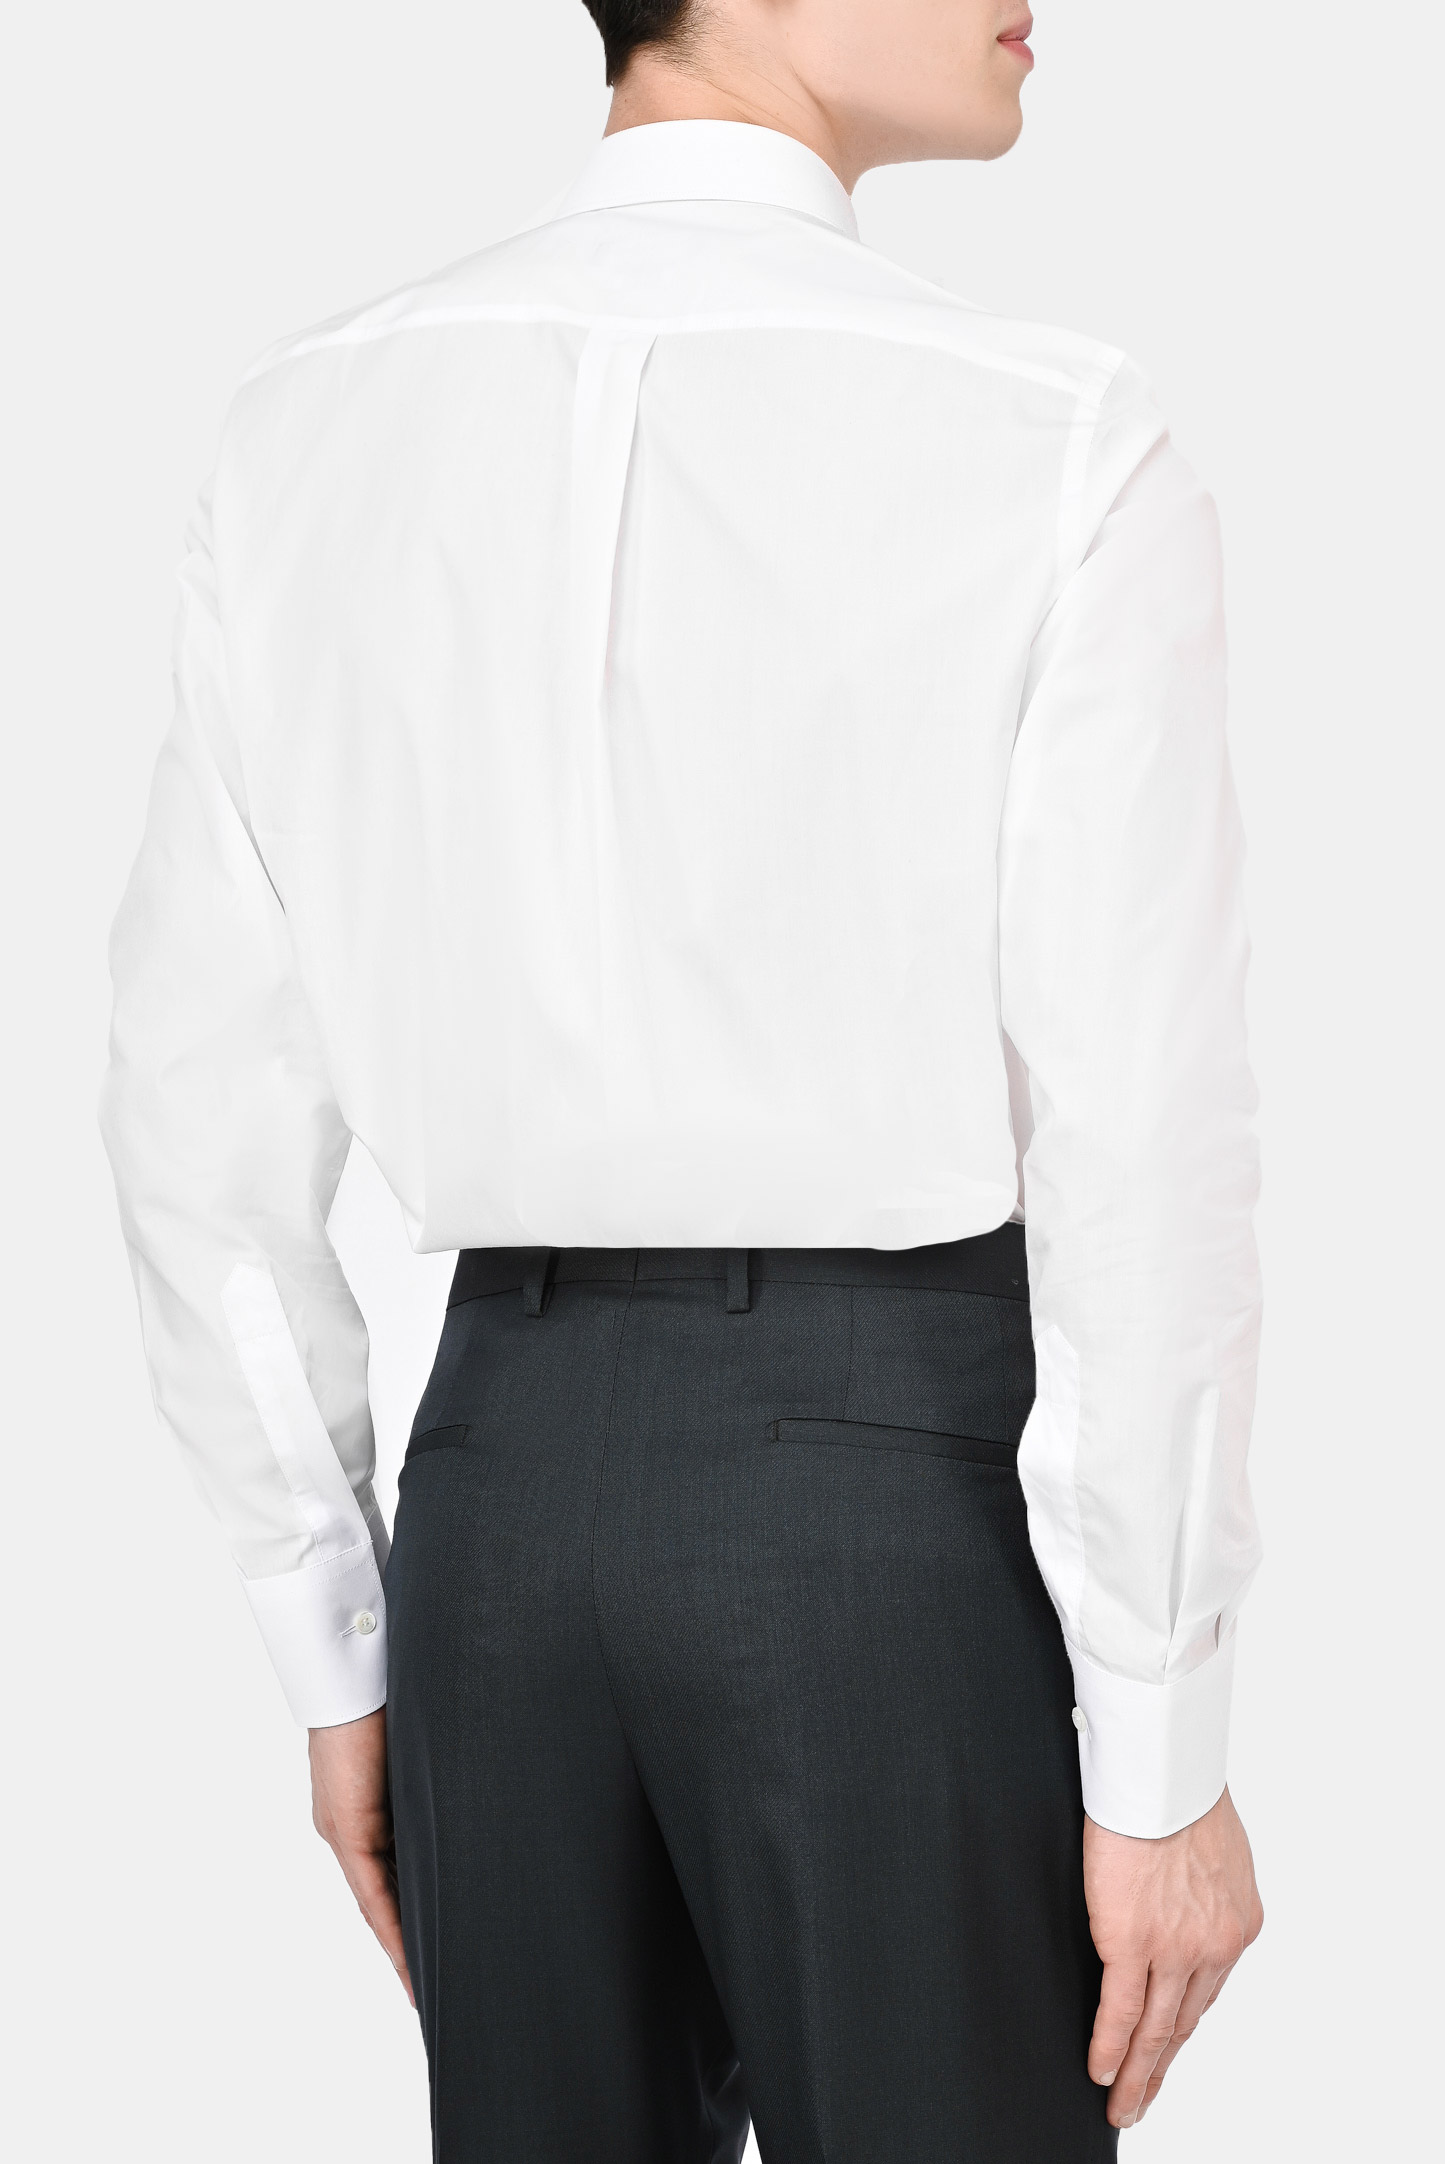 Рубашка DOLCE & GABBANA G5IX6T FU5K9, цвет: Белый, Мужской